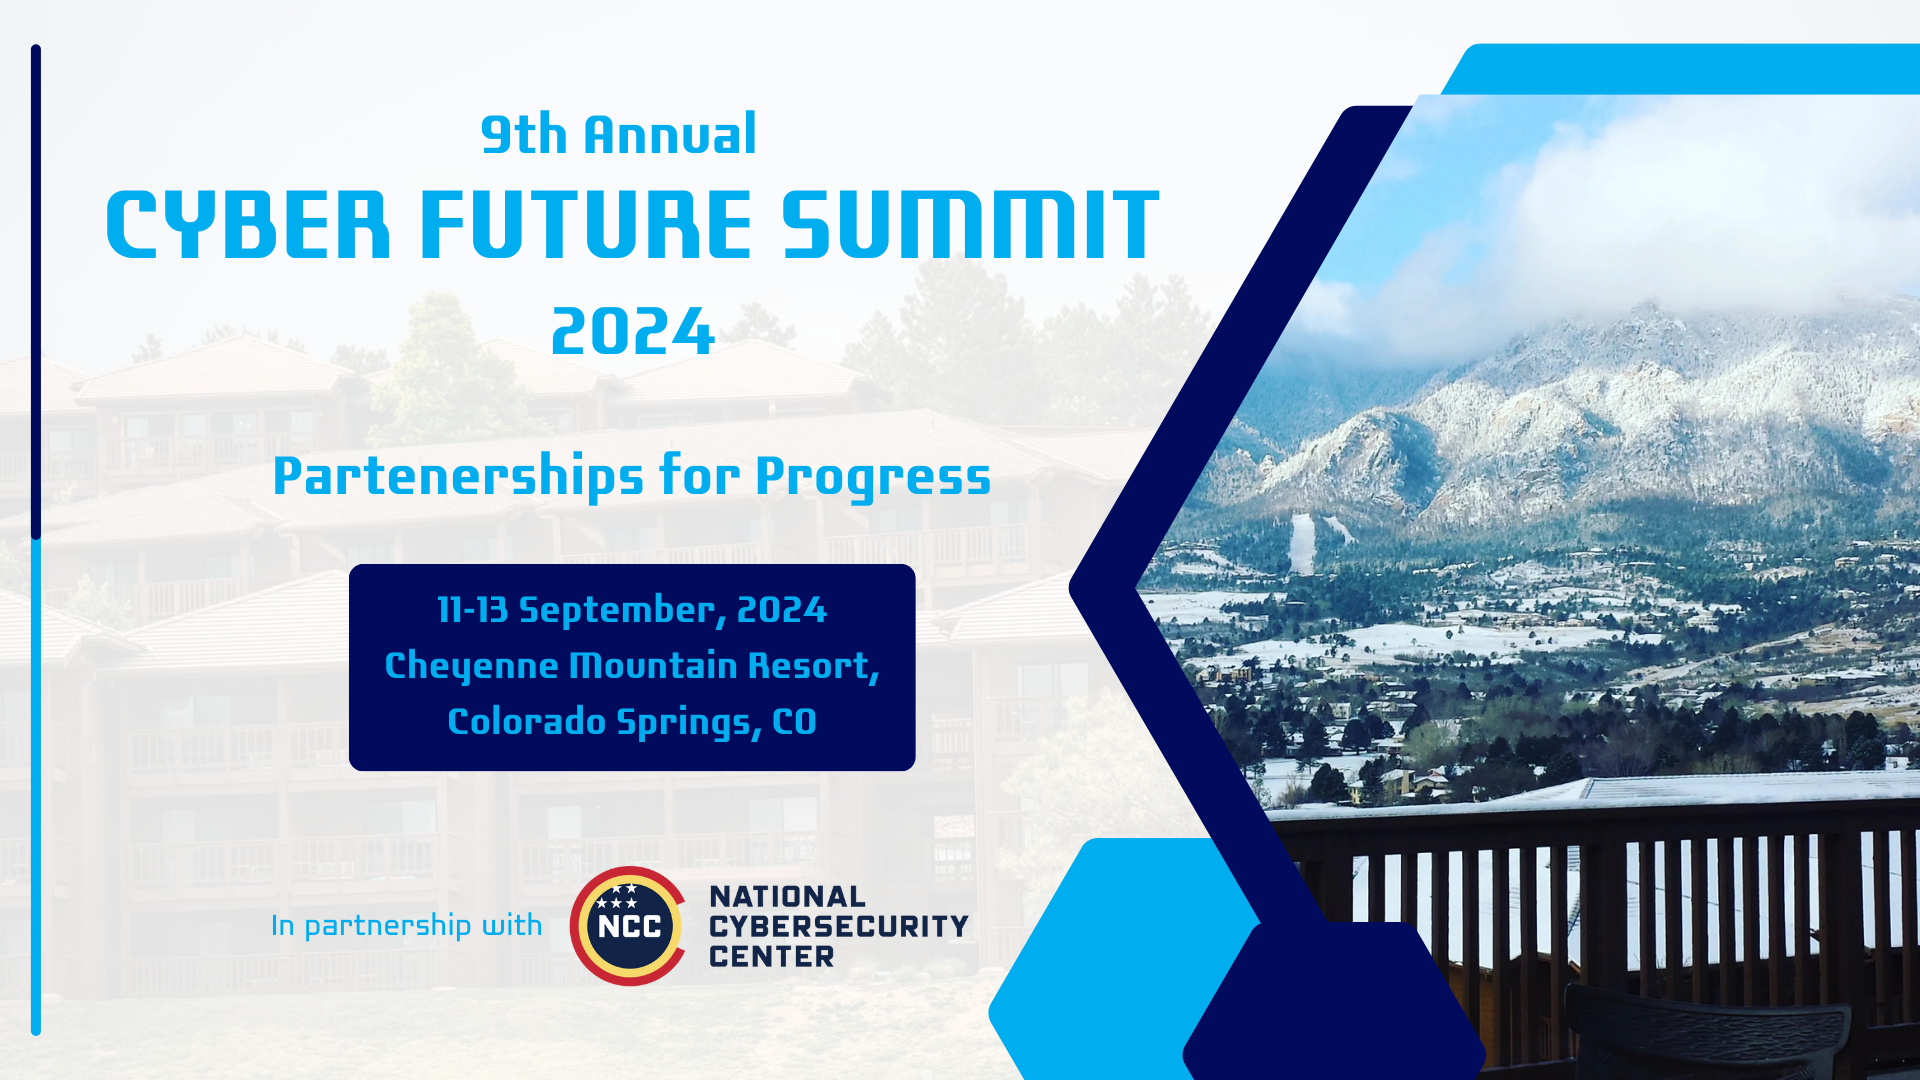 News — Summit Future Foundation